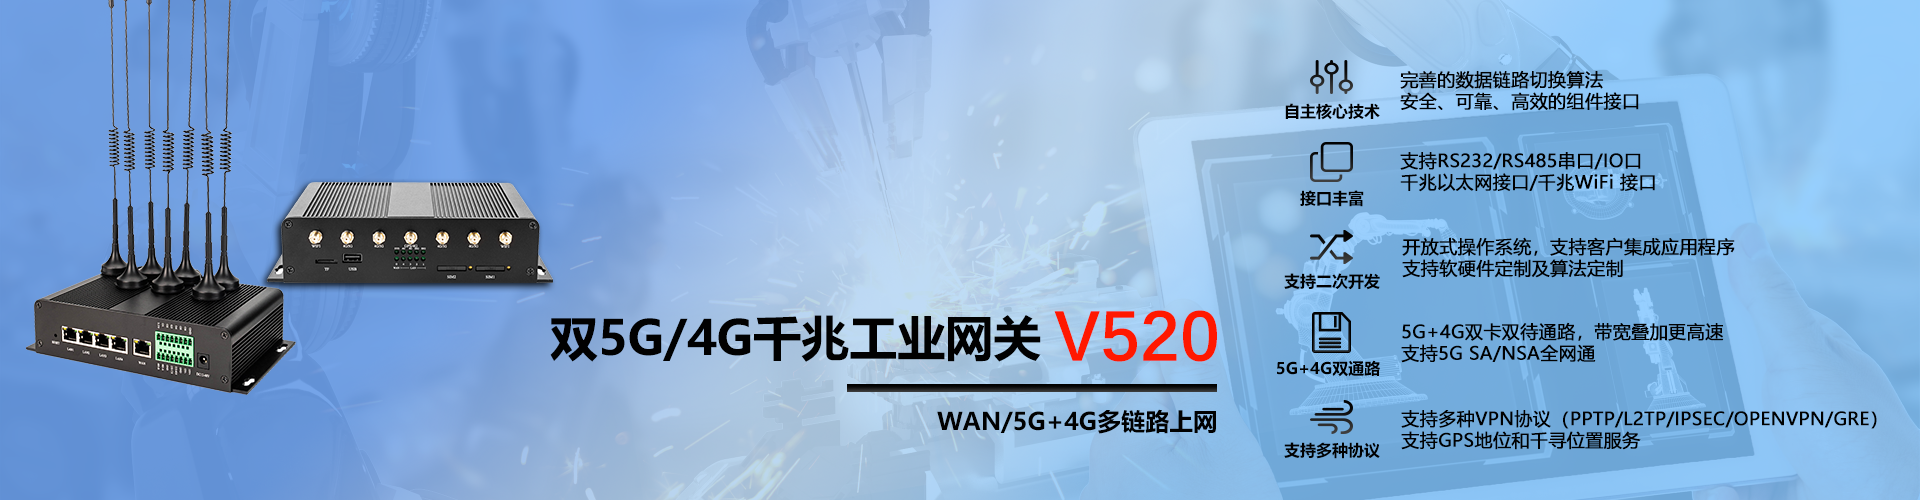 banner-高性能工业网关V520 1.png